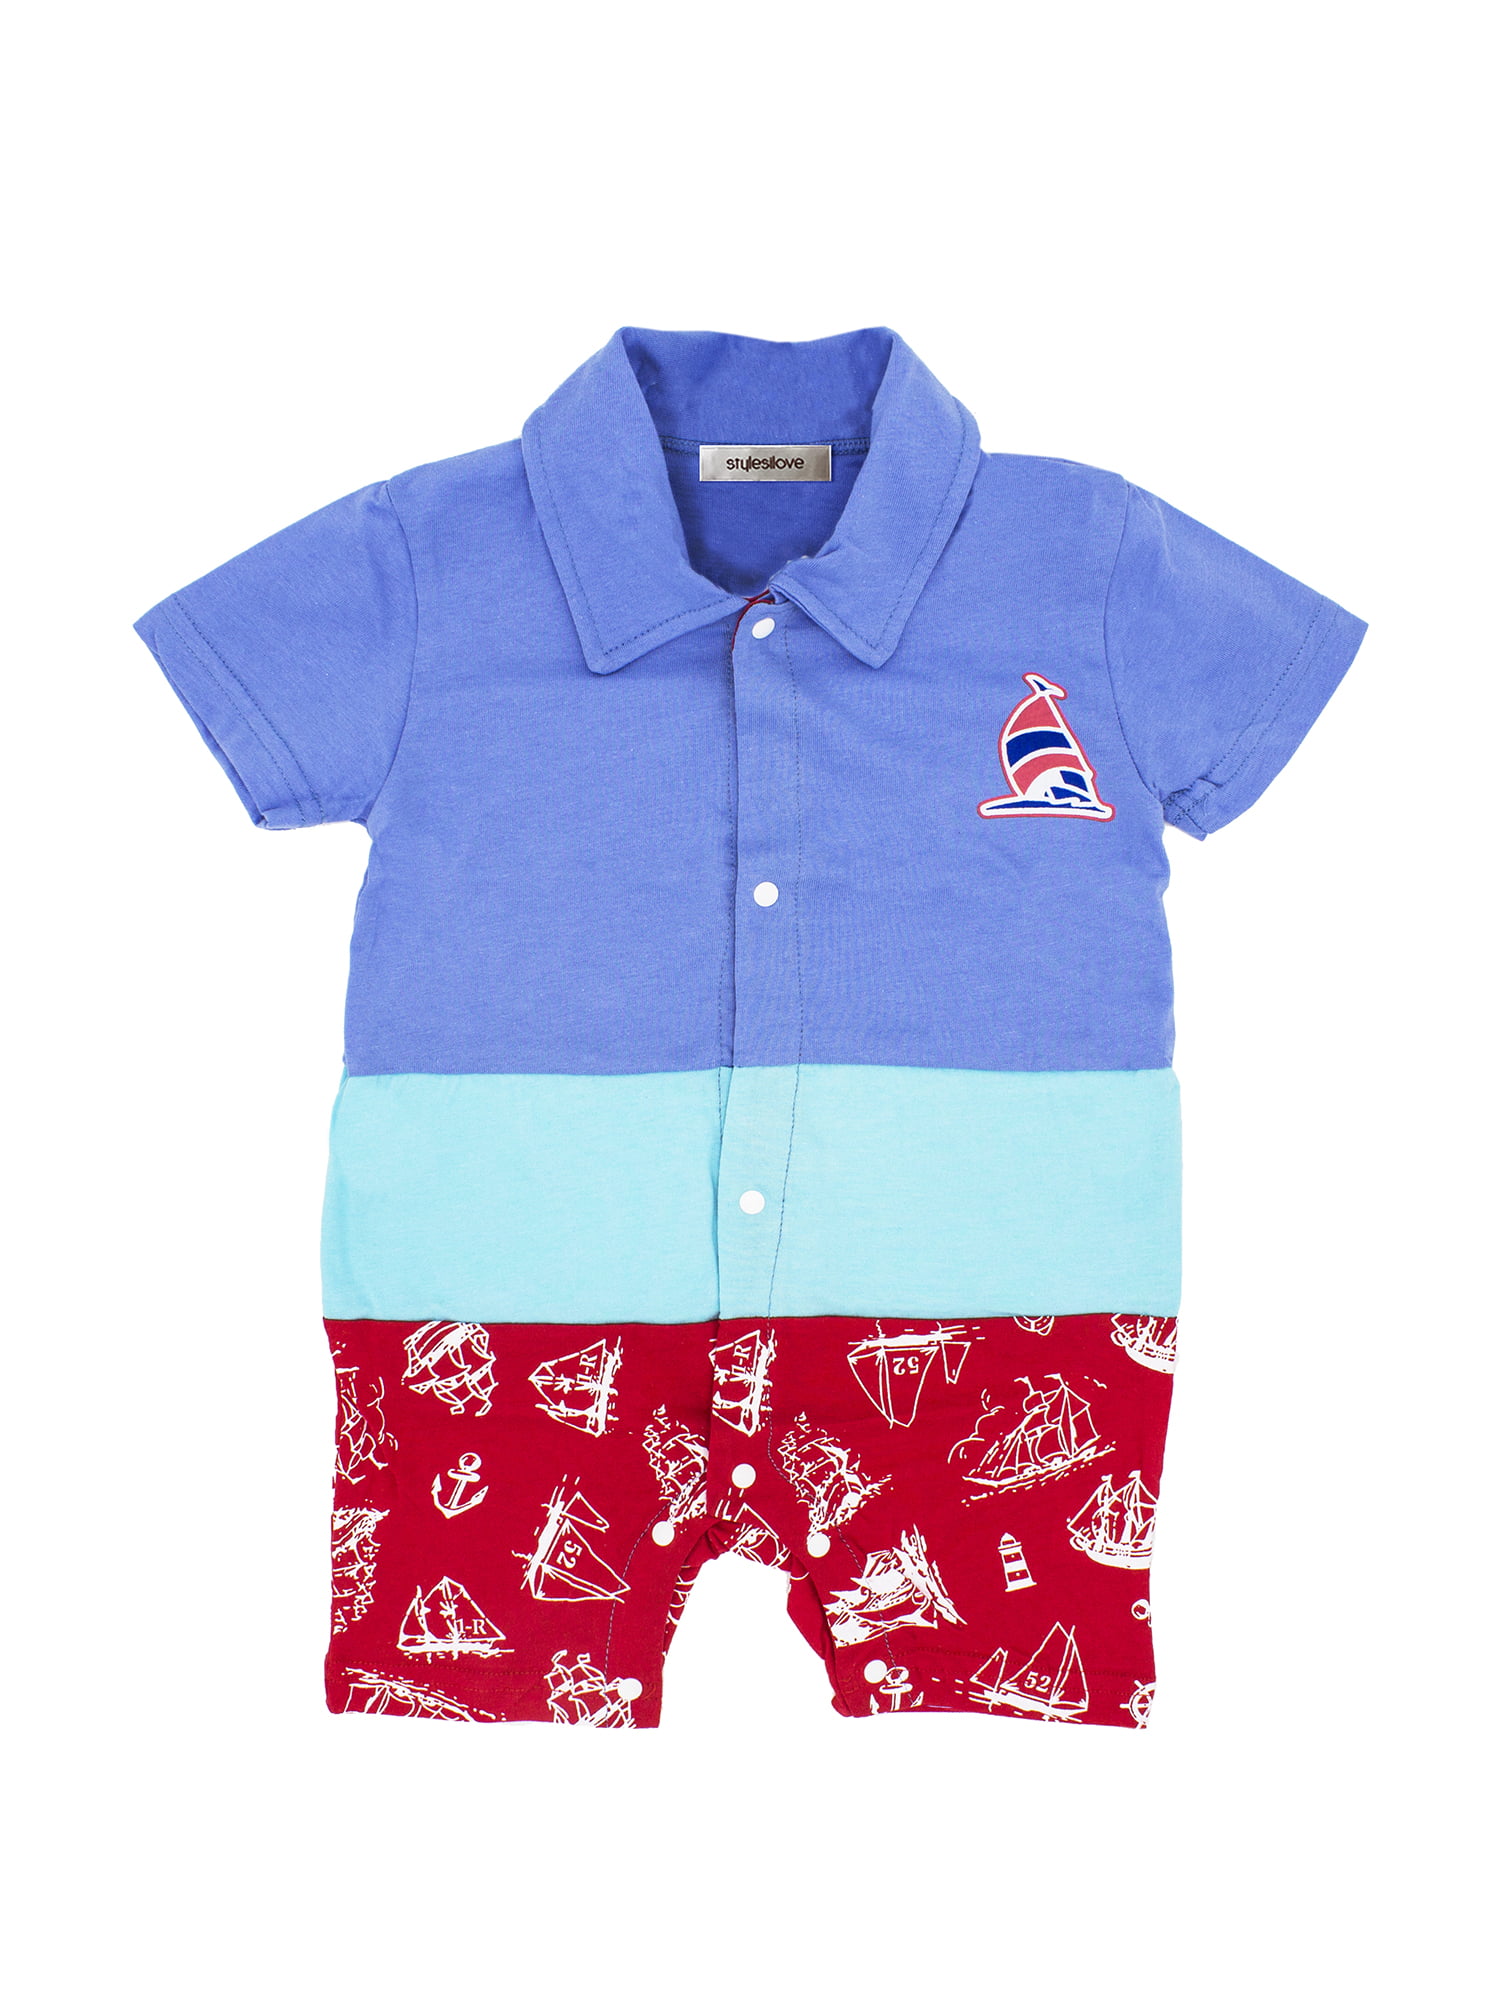 StylesILove Handsome Boat Baby Boy Romper Onesie, 2 Colors (18-24 Months,  Blue) - Walmart.com